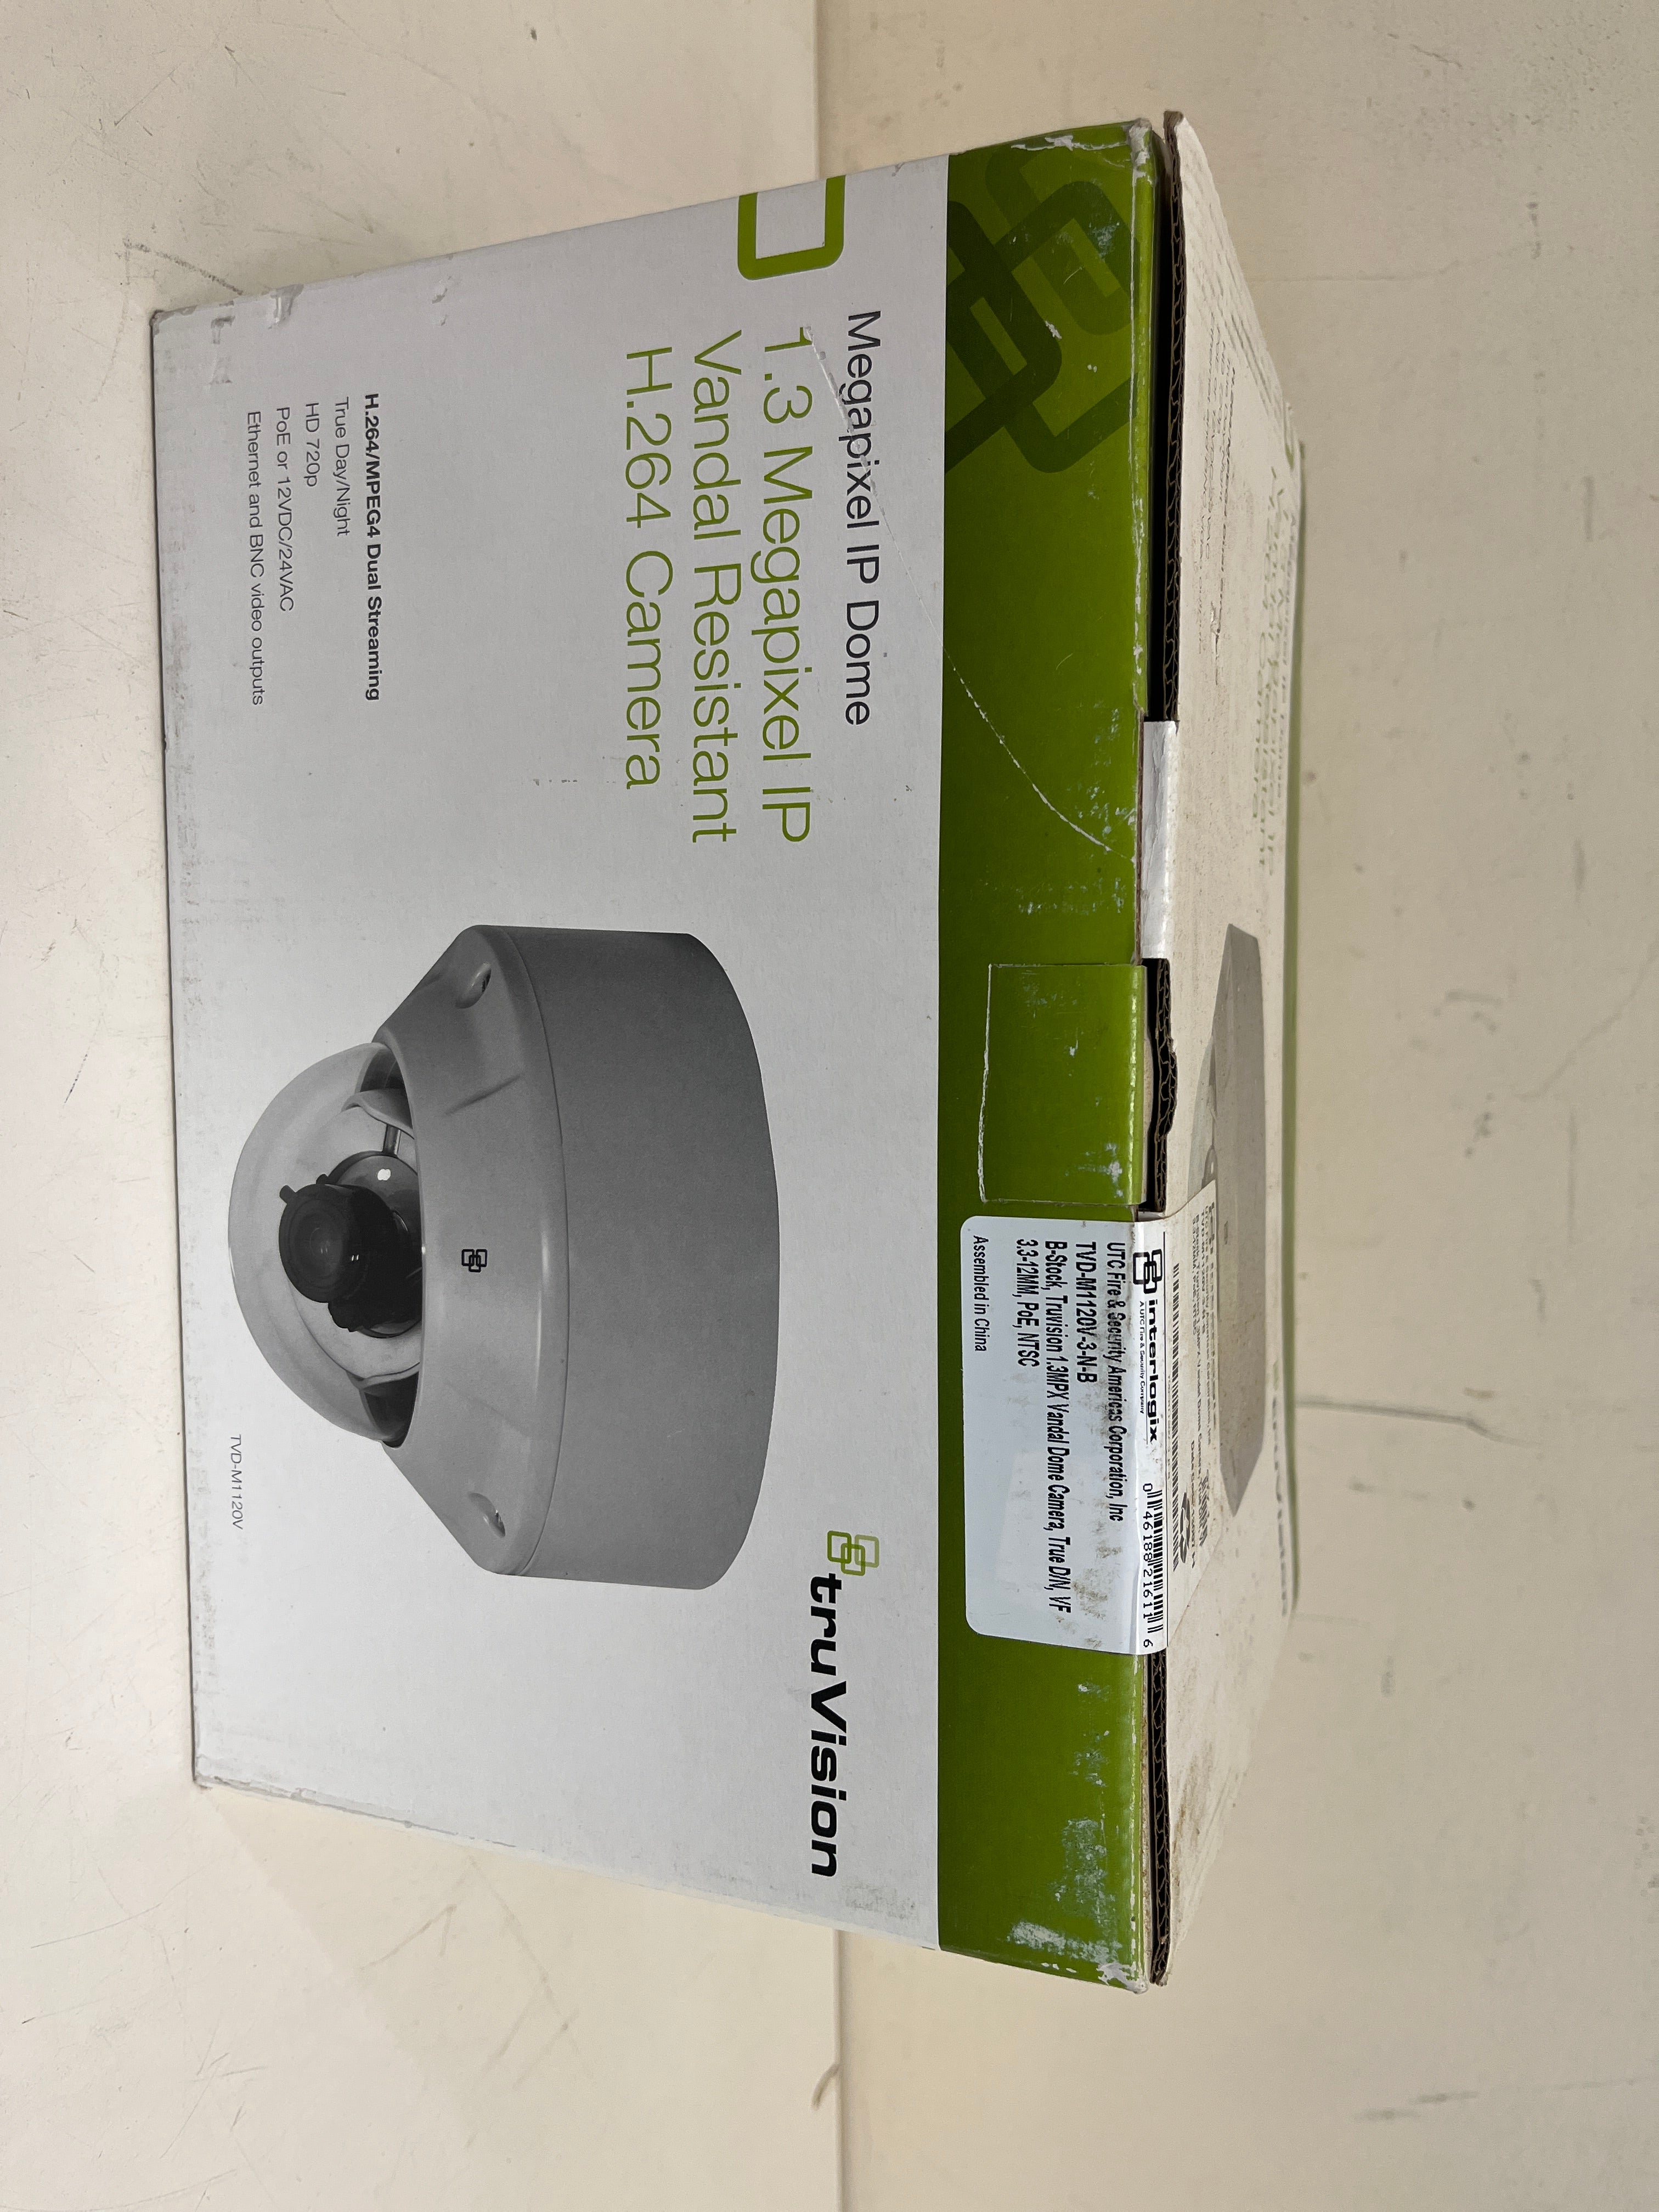 Interlogix truVision 1.3MP IP Vandal Resistant H.264 Dome Security Camera